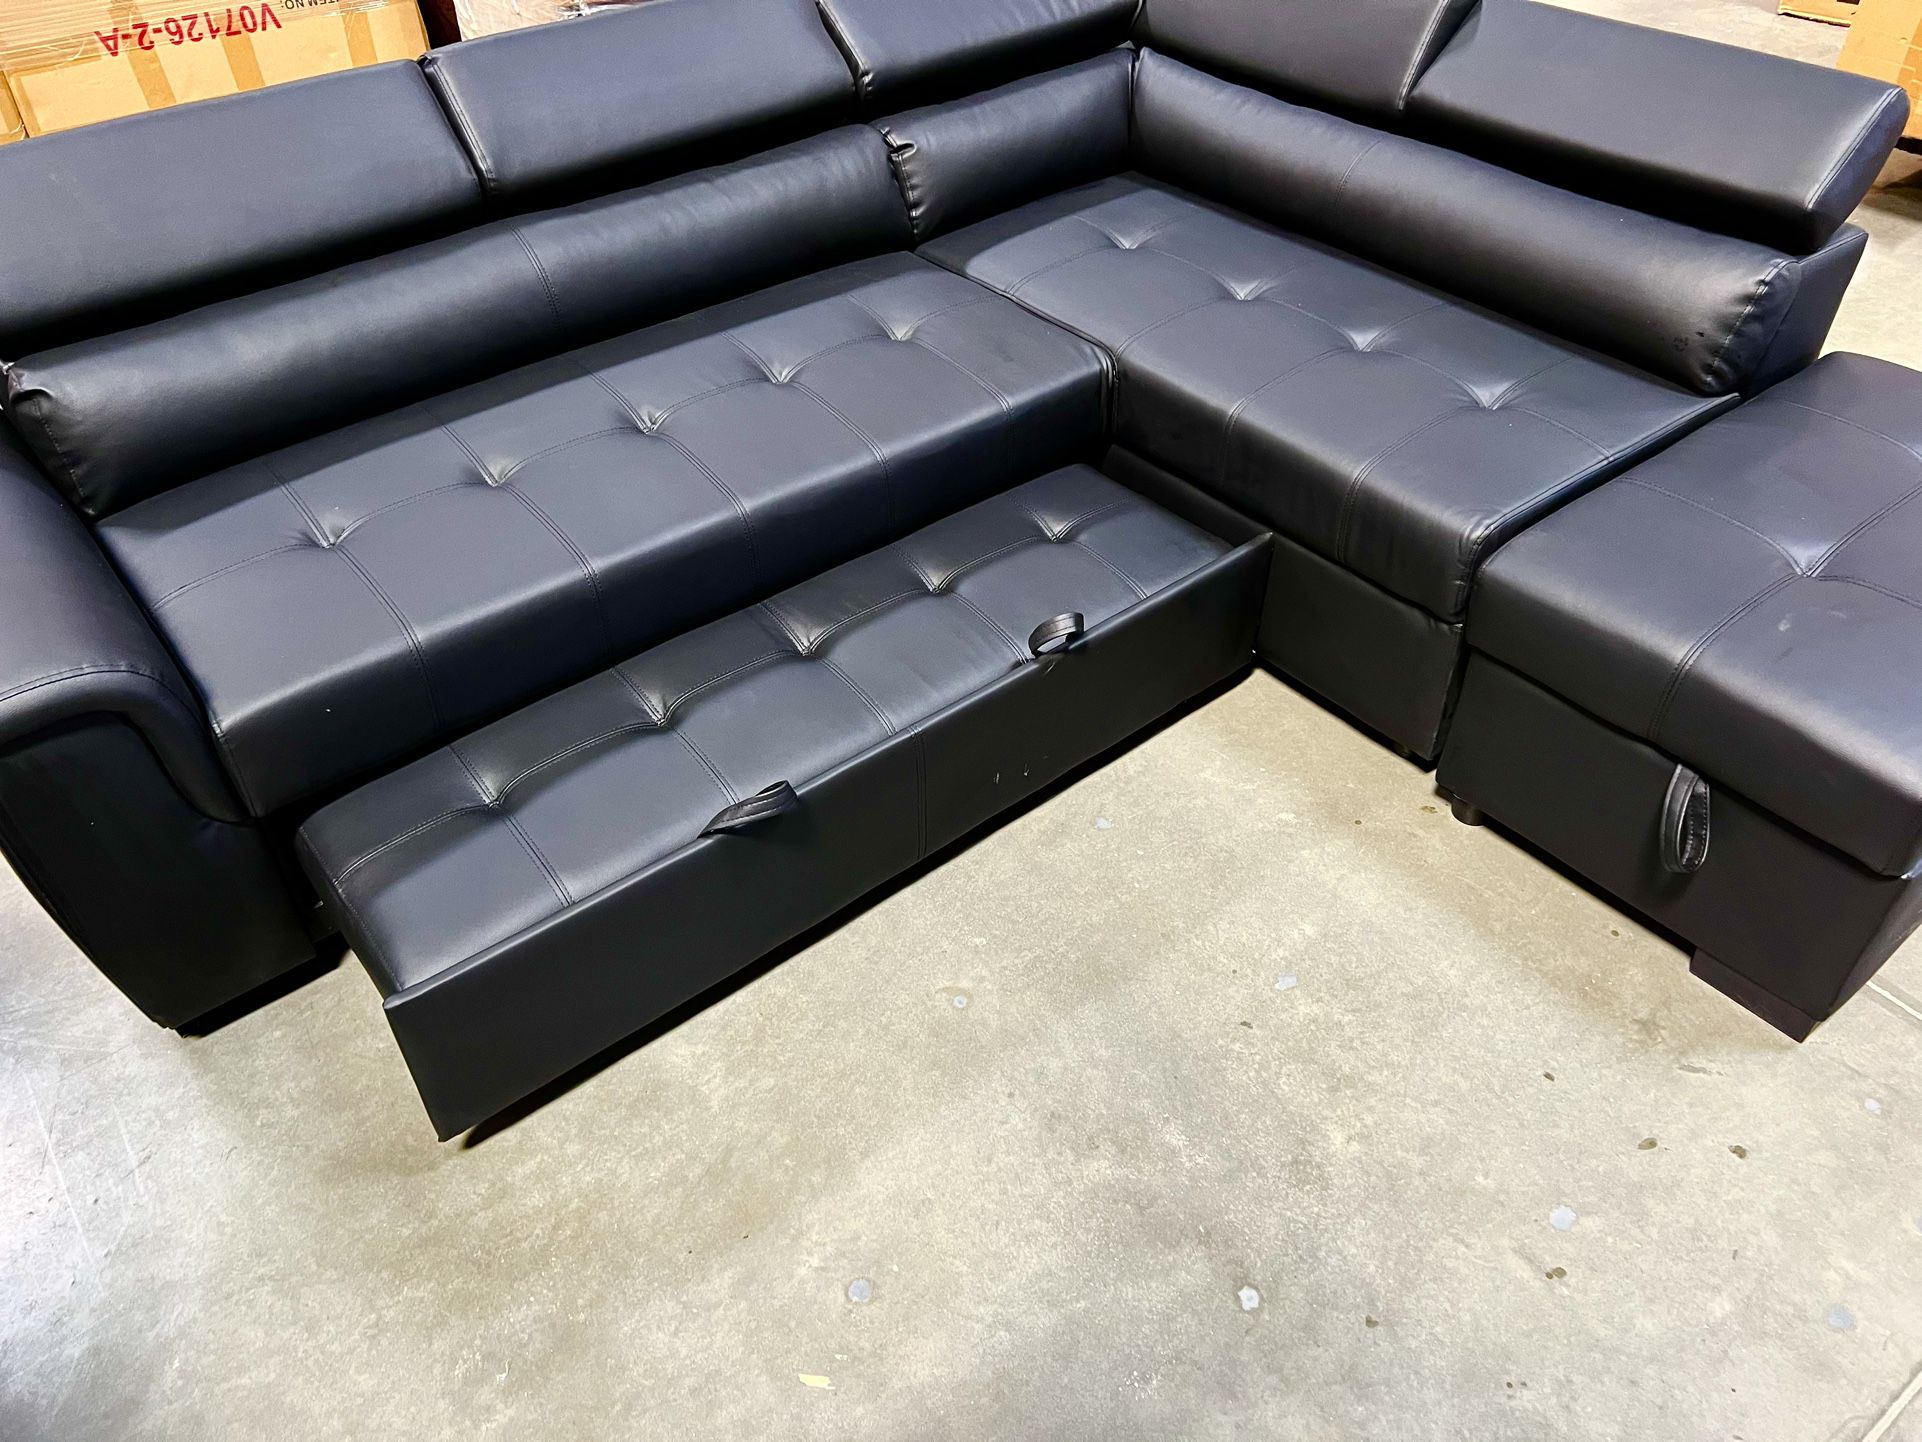 New! Contemporary Sectional Sofa, Black Sectional, Black Sectional Sofa With Pull Out Bed, Faux Leather Sectional Sofa Bed, Sofabed, Sleeper Sofa